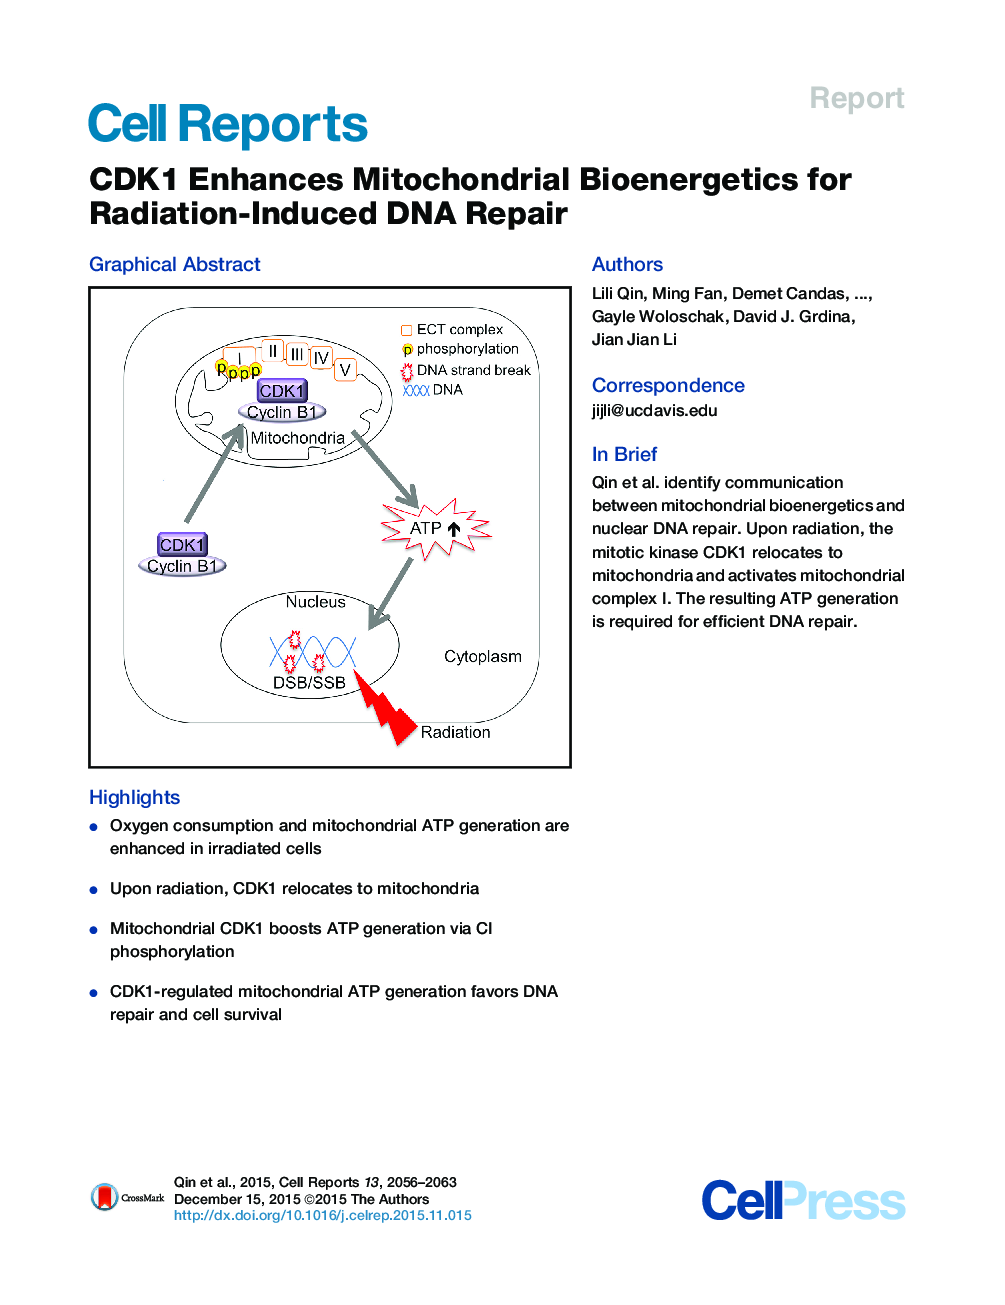 CDK1 Enhances Mitochondrial Bioenergetics for Radiation-Induced DNA Repair 